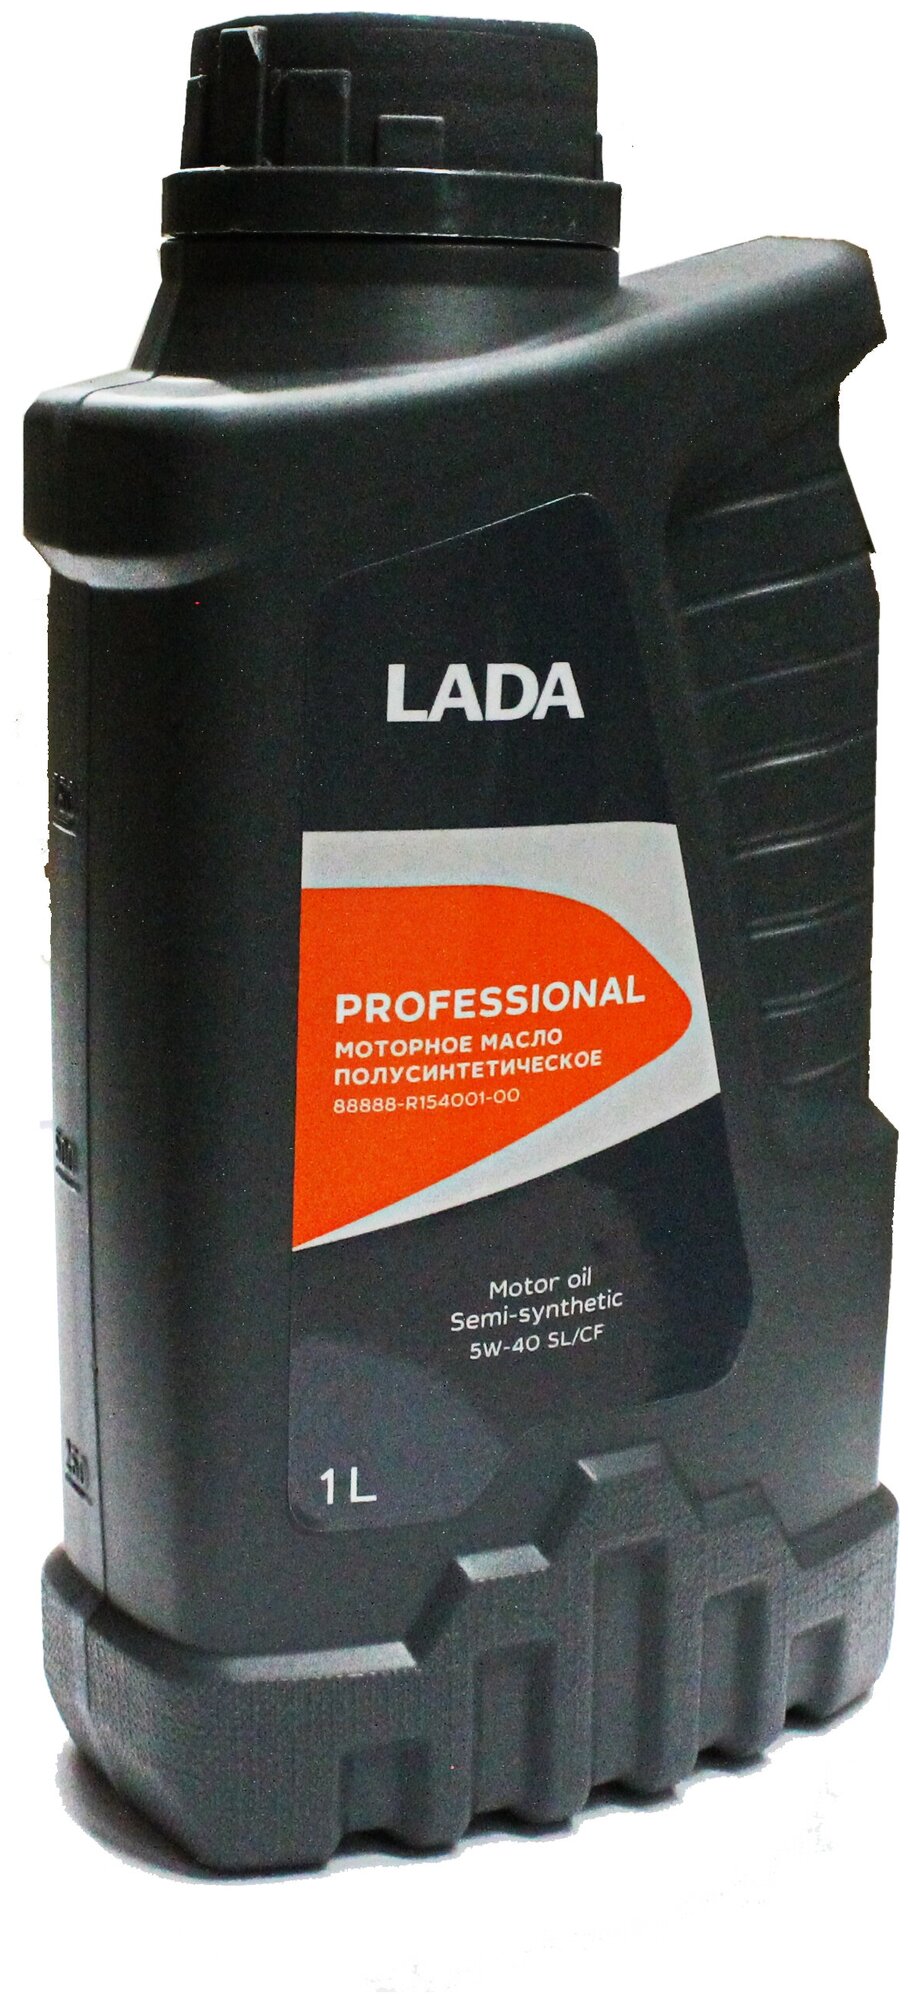 Масло моторное LADA Professional 5W-40, полусинтетическое, 1 л